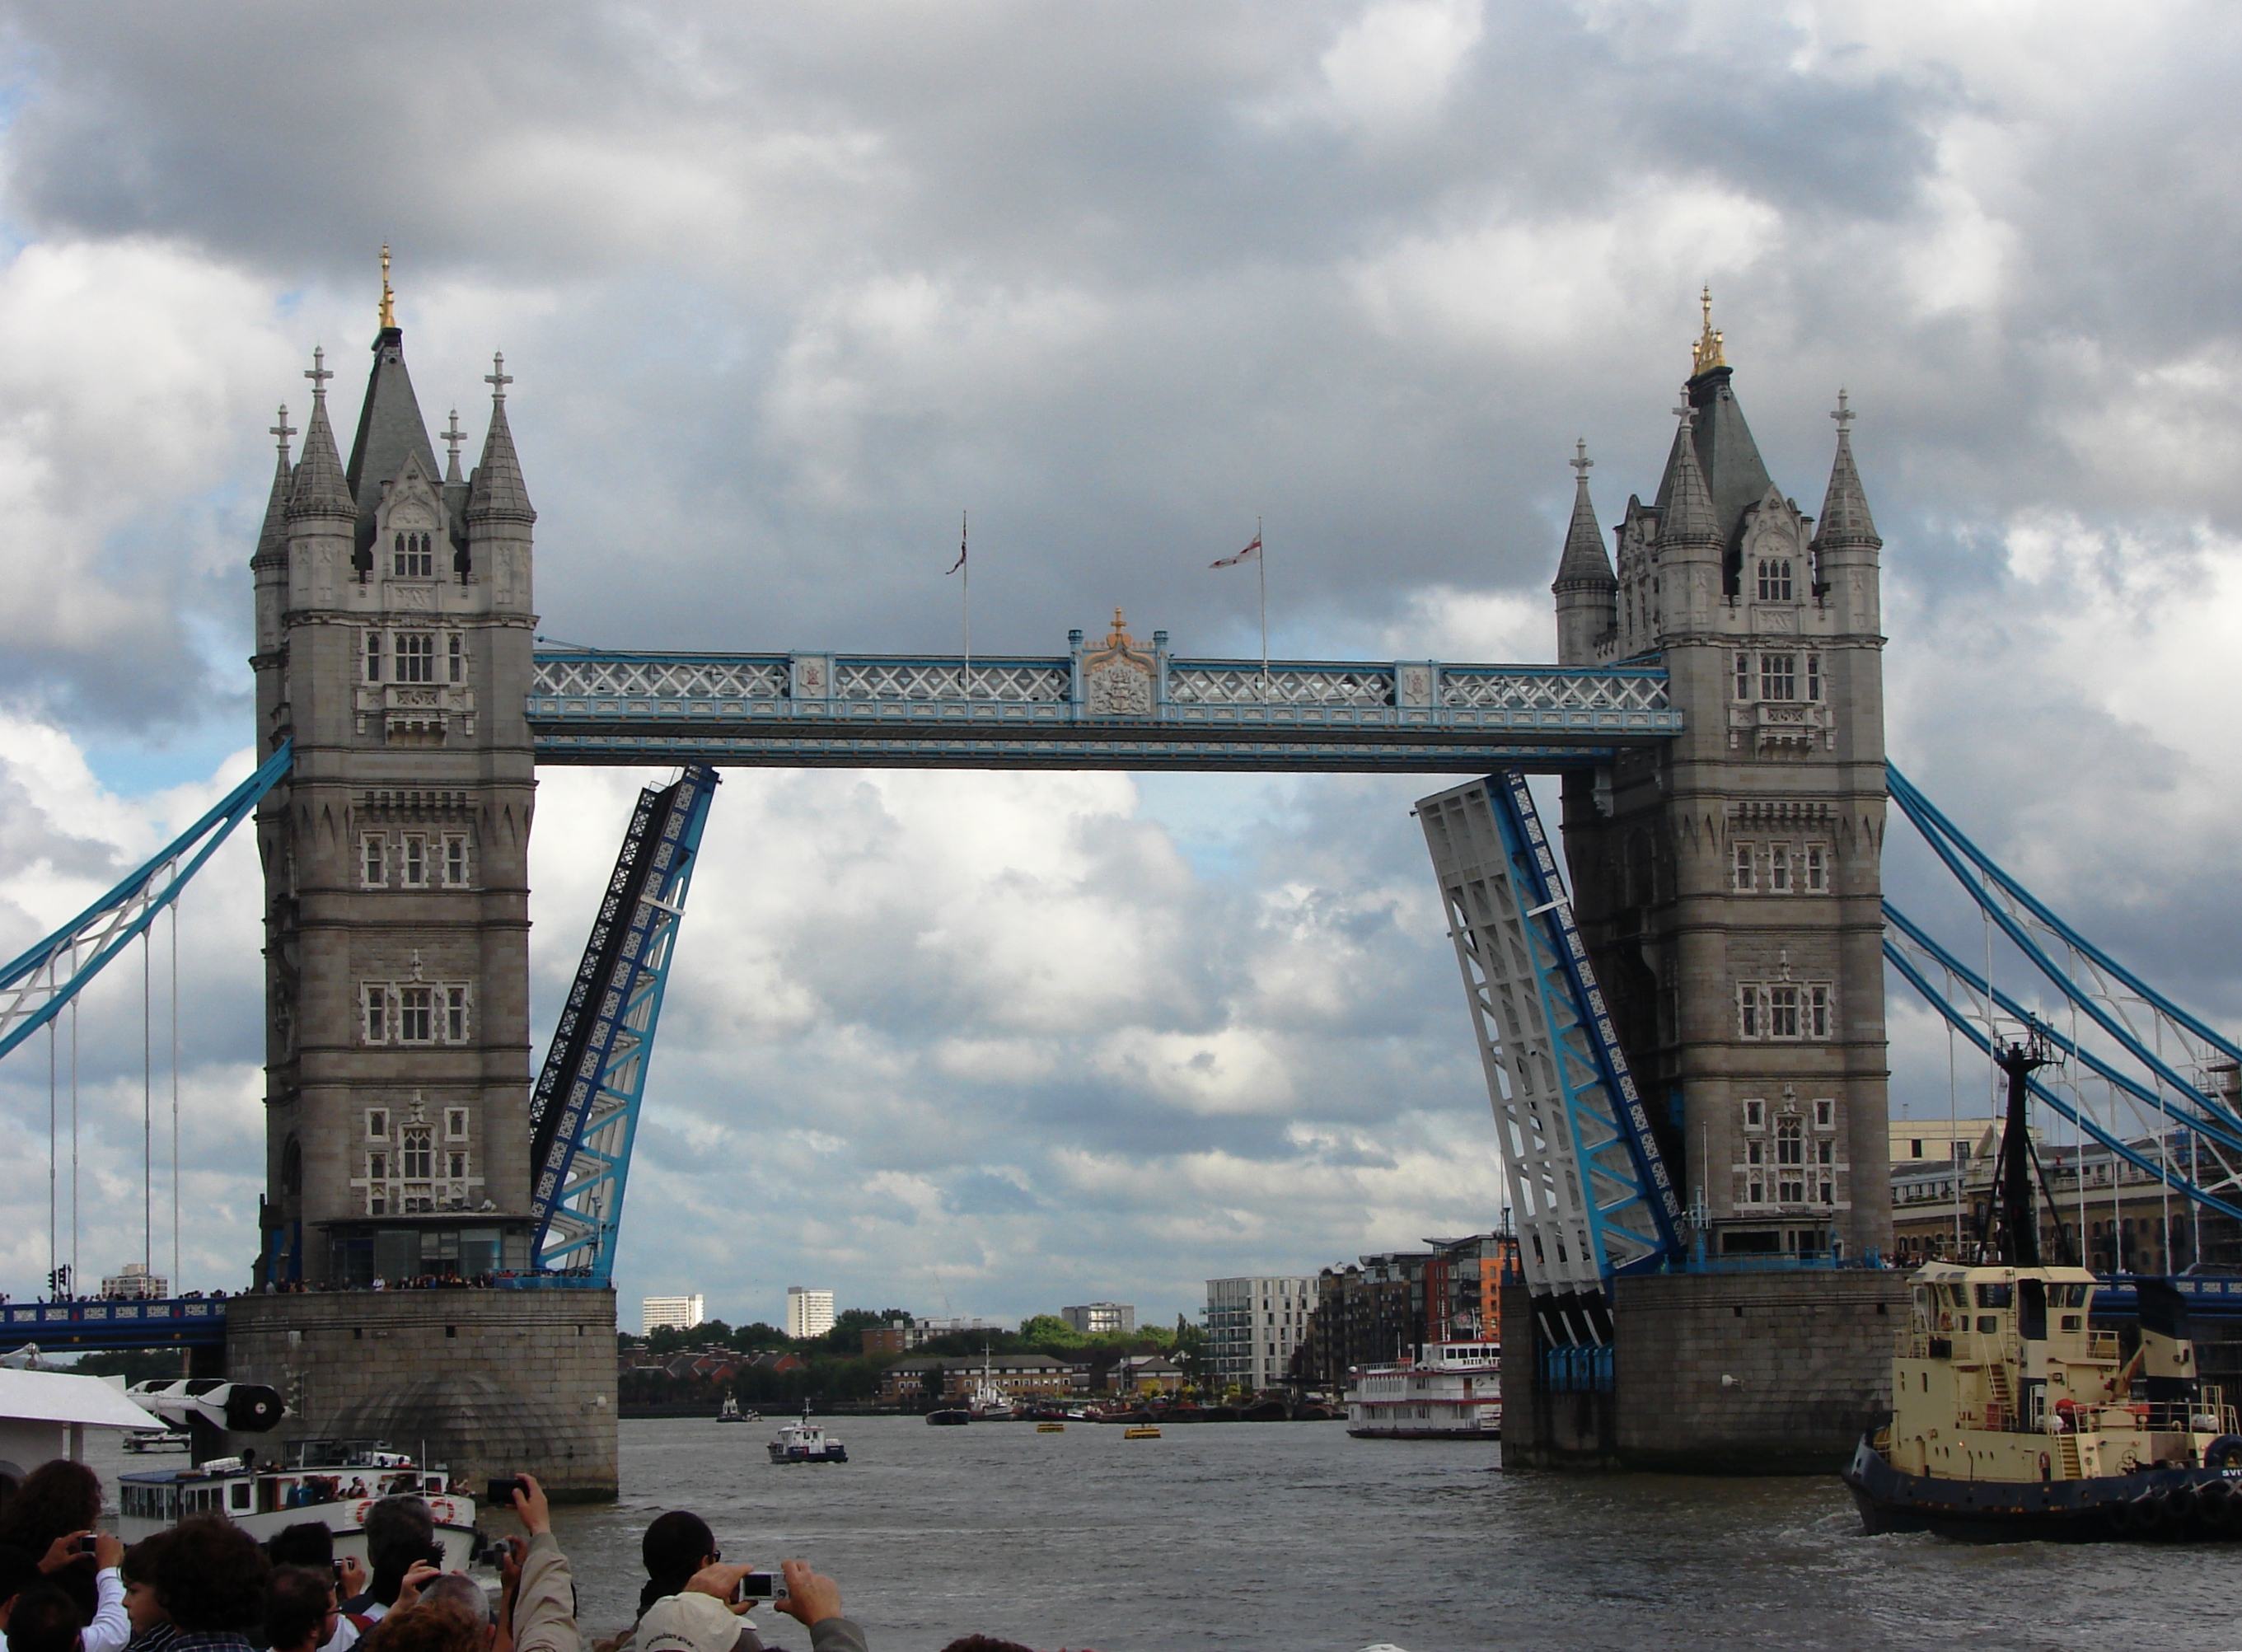 File:Tower Bridge,London Getting Opened 6.jpg - Wikimedia Commons